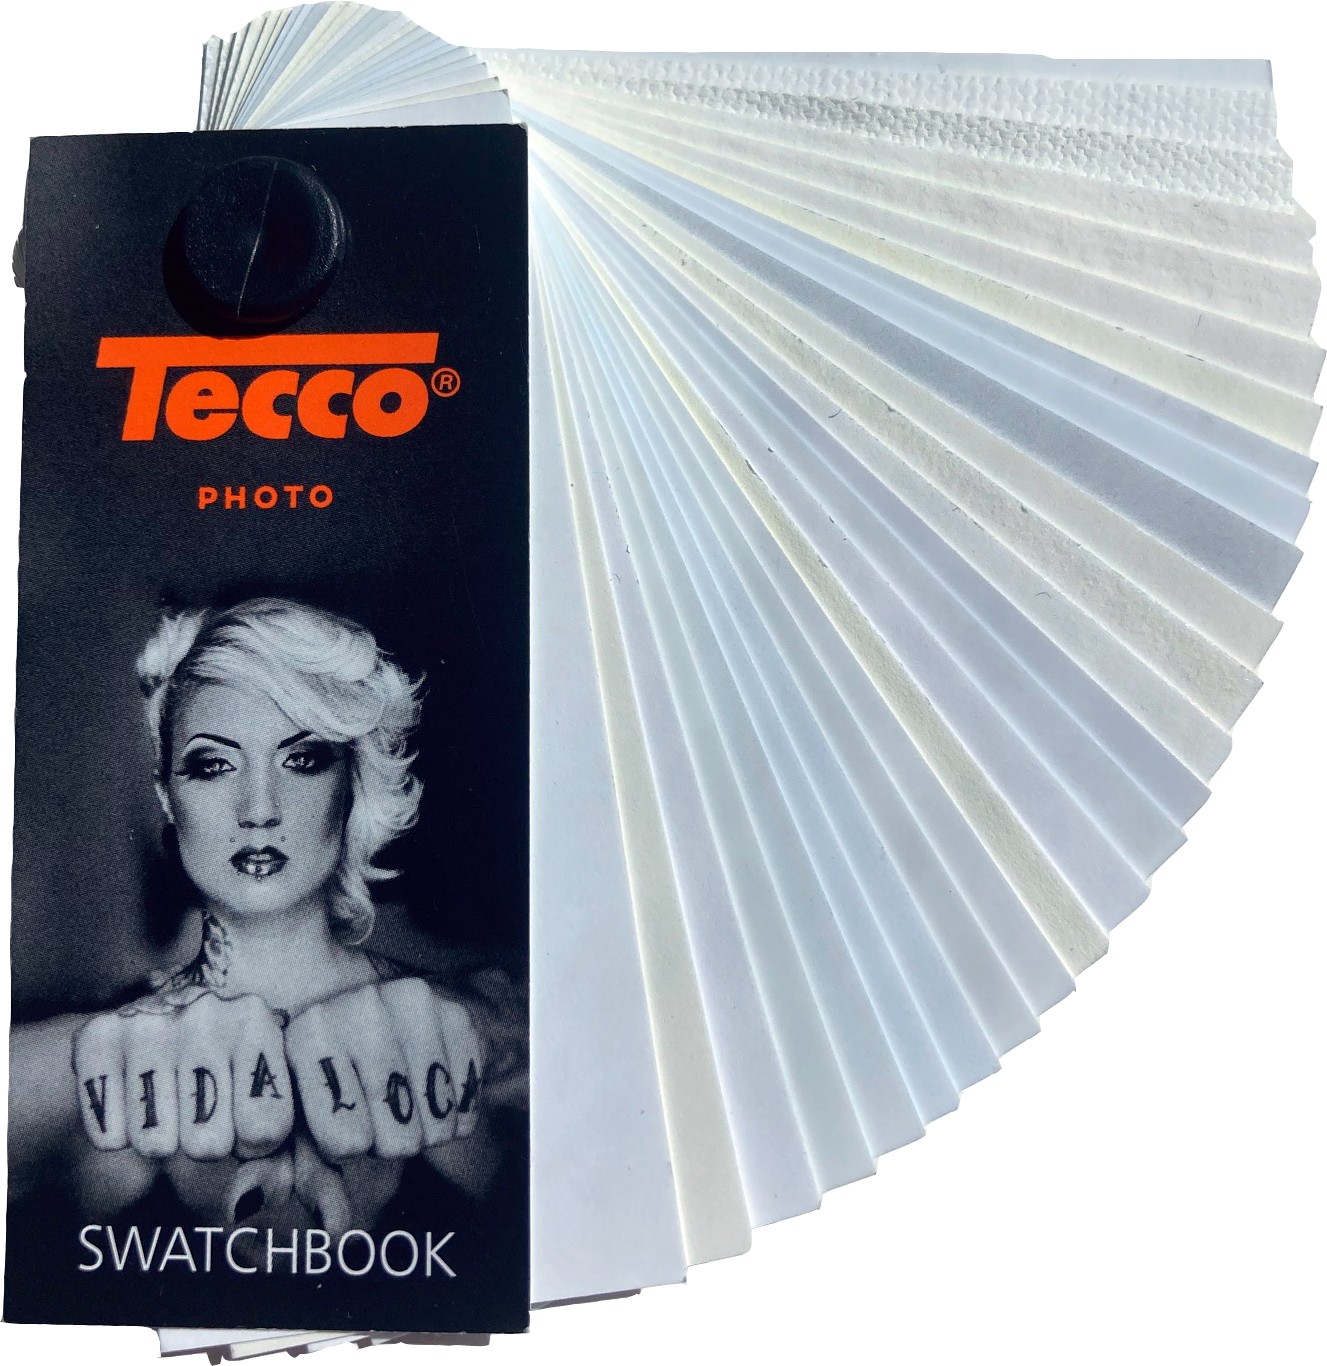 Swatch Book Tecco Photo.jpg